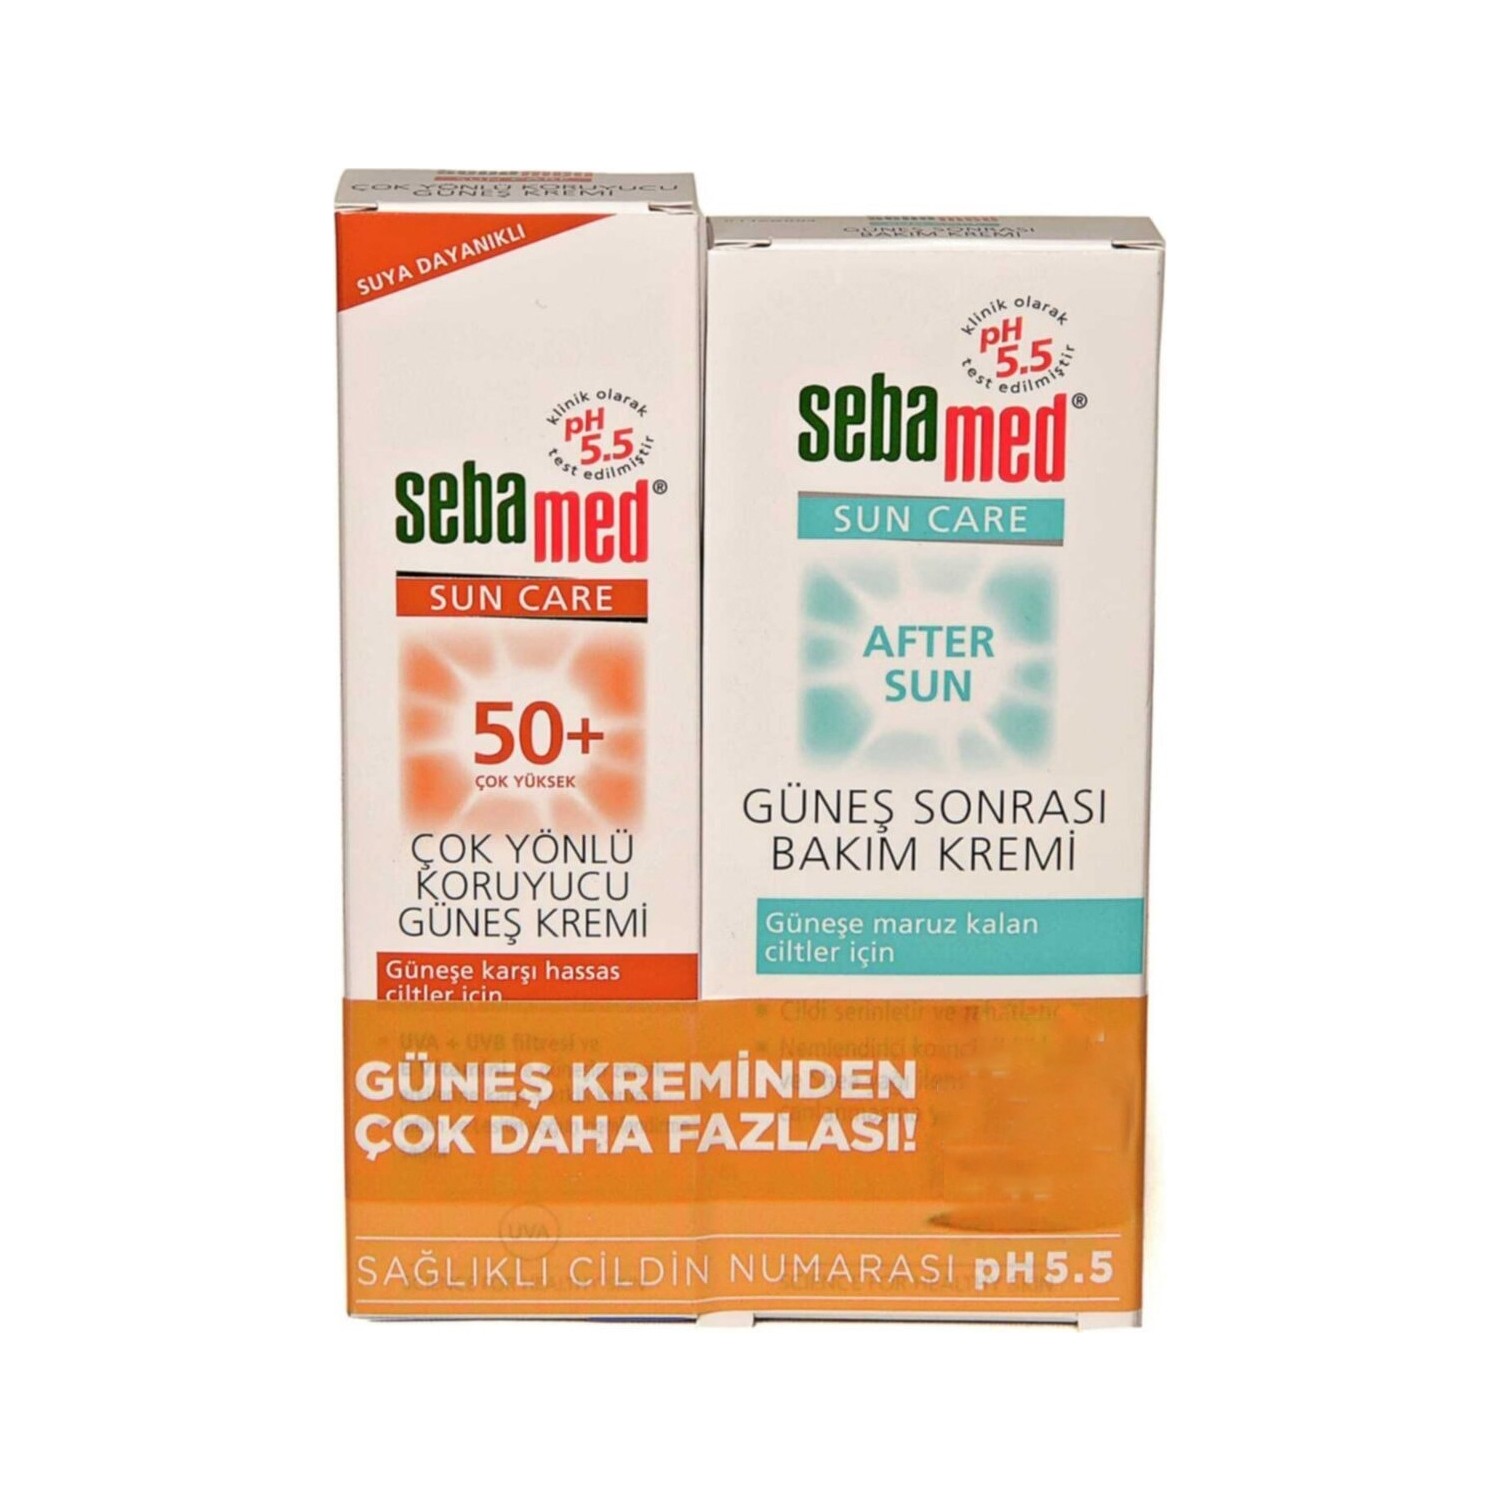 Солнцезащитный крем Sebamed Sun Care SPF 50+, 100 мл